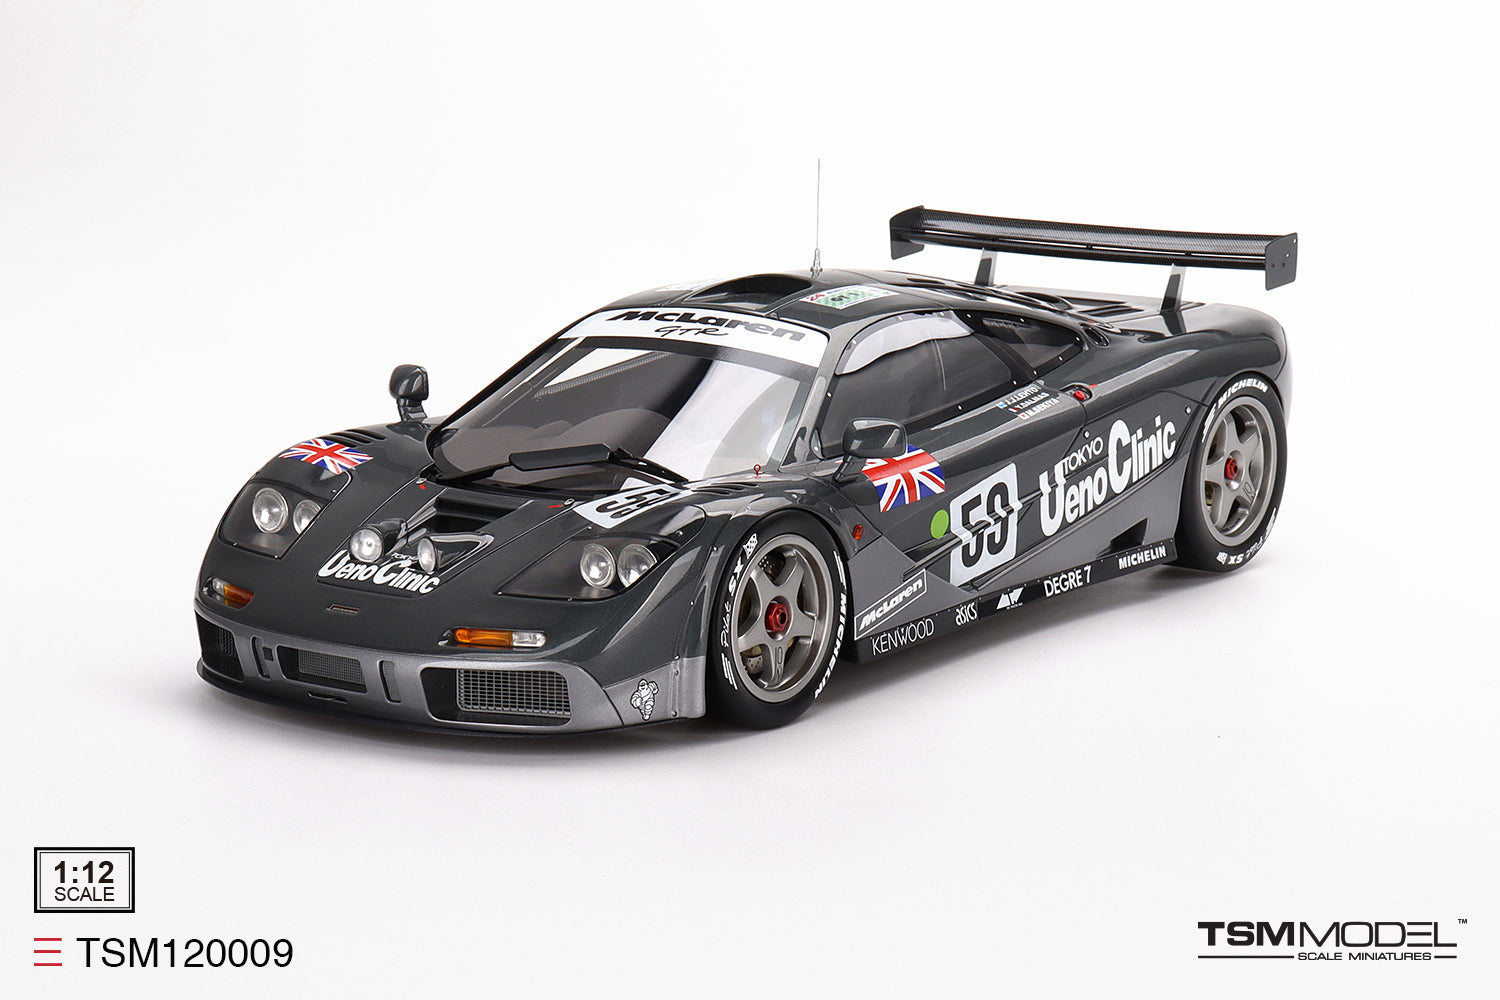 1:12 scale McLaren F1 GTR Le Mans winner 1995